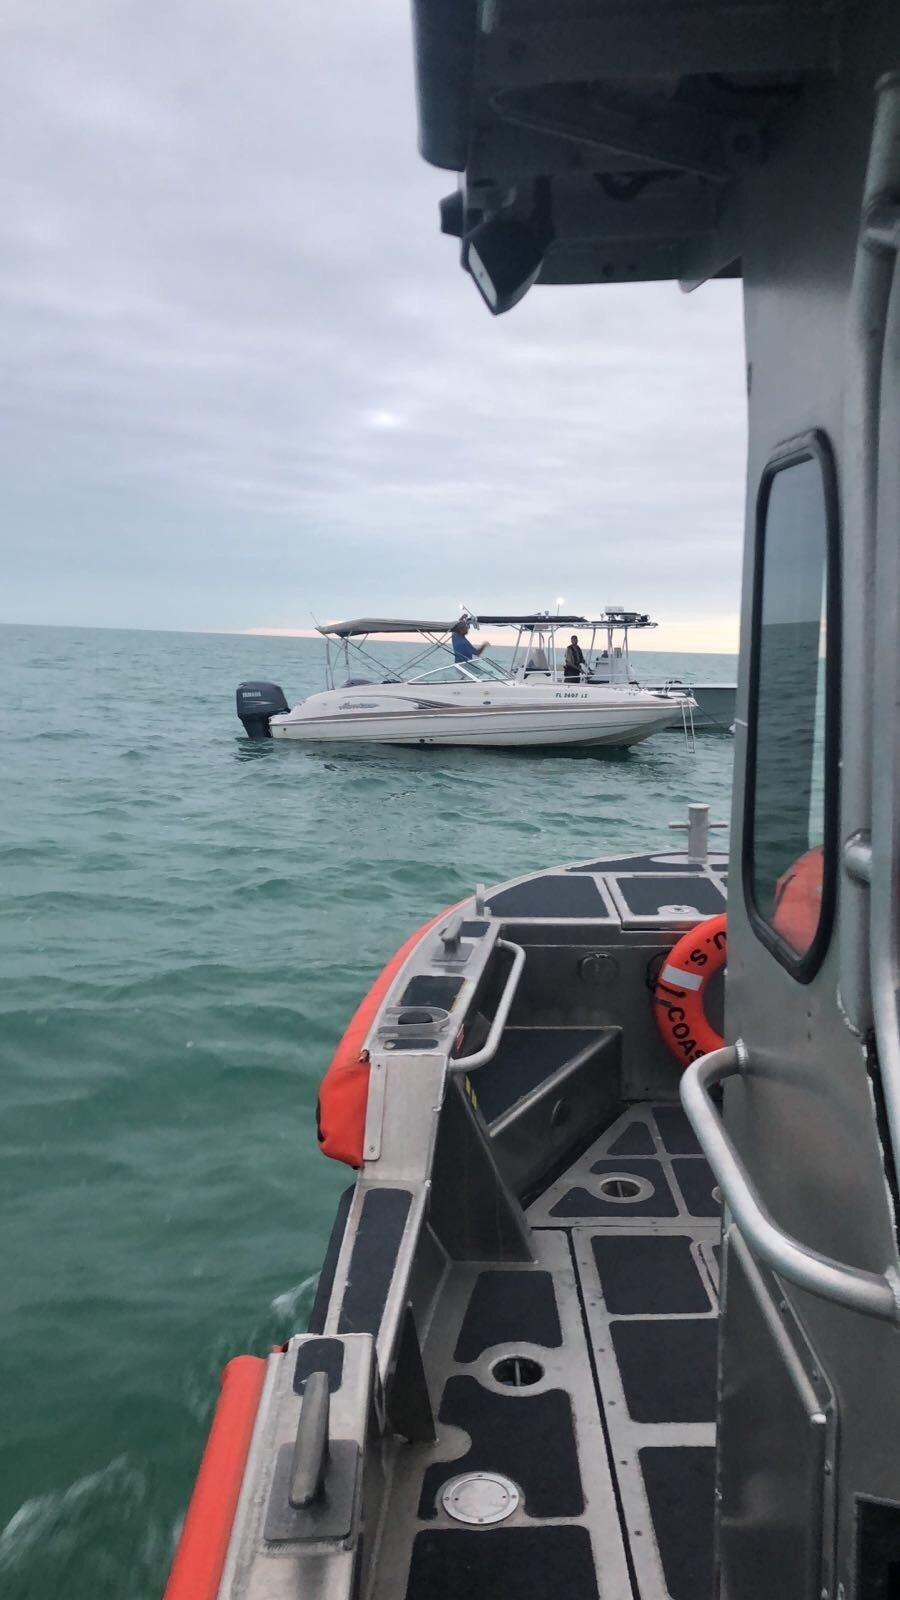 Coast Guard/FWC rescues two people in water near Lower Matecumbe Key